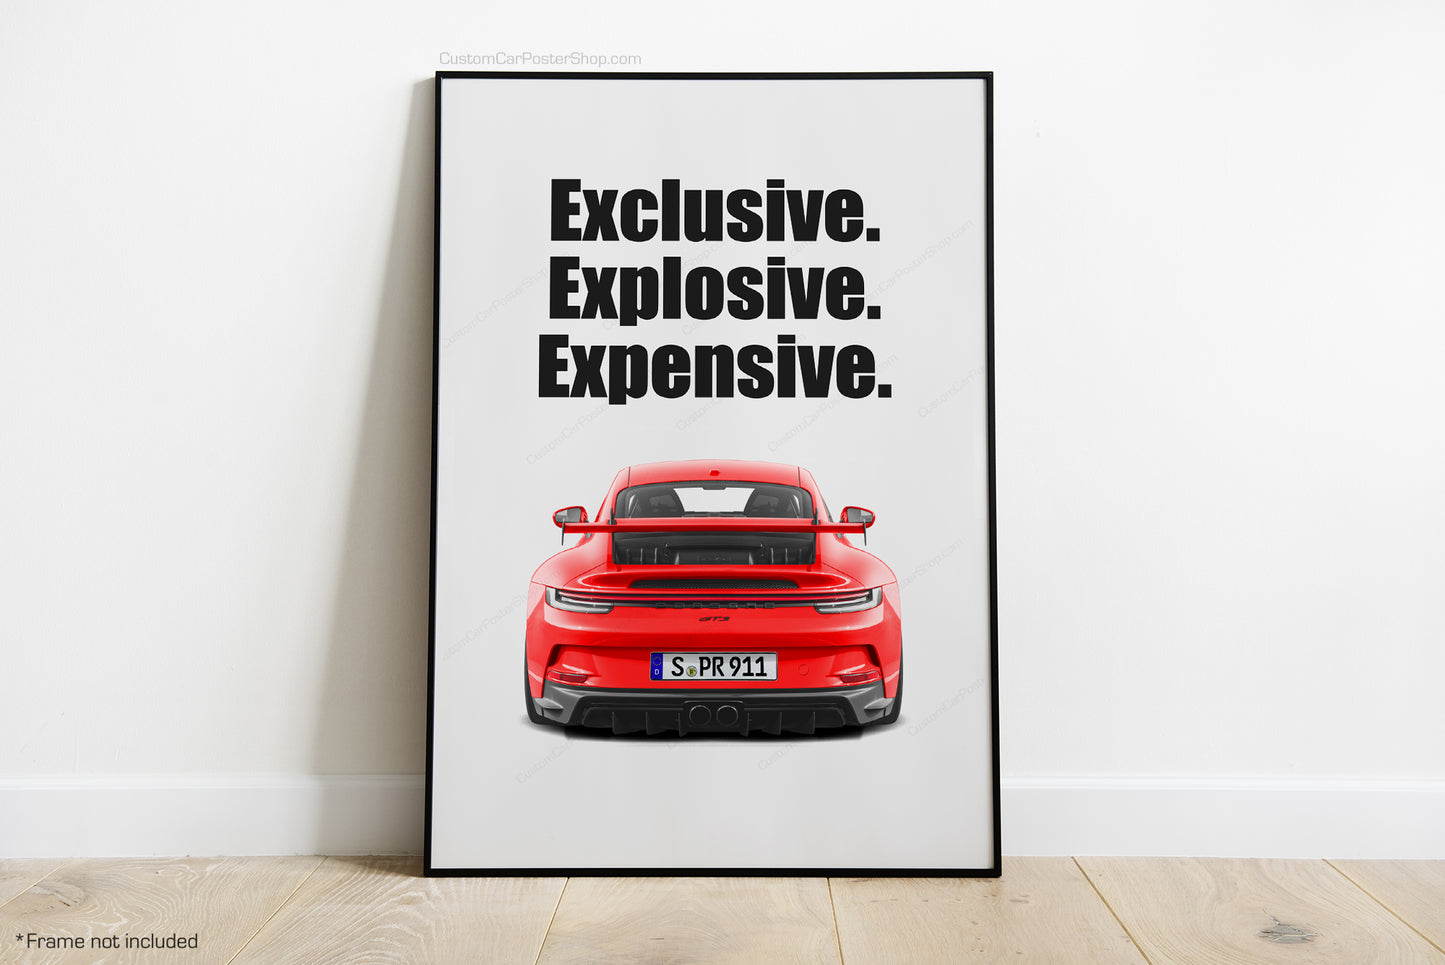 Explosive, Exclusive, Expensive - Porsche 911 GT3 (992) Vintage Porsche Ads